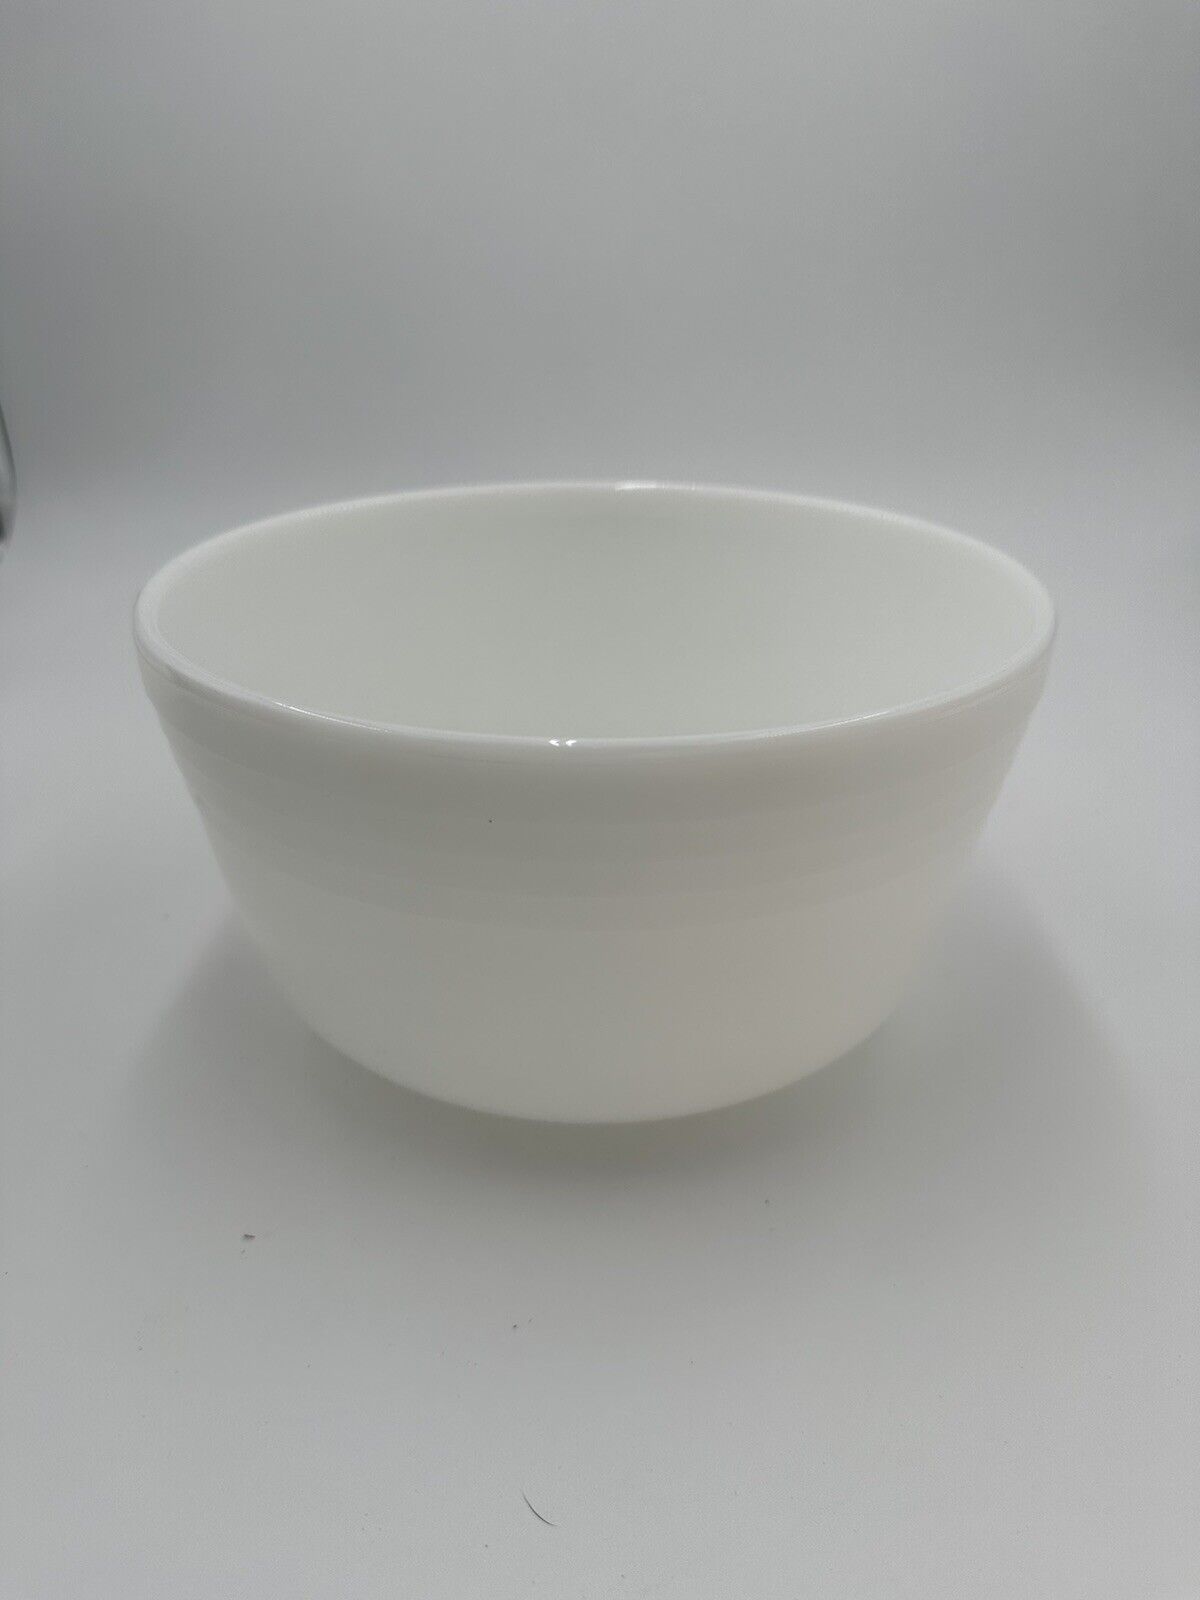 Vintage Pyrex Ribbed Mixing Bowl Hamilton Beach White Milk Glass Made in USA